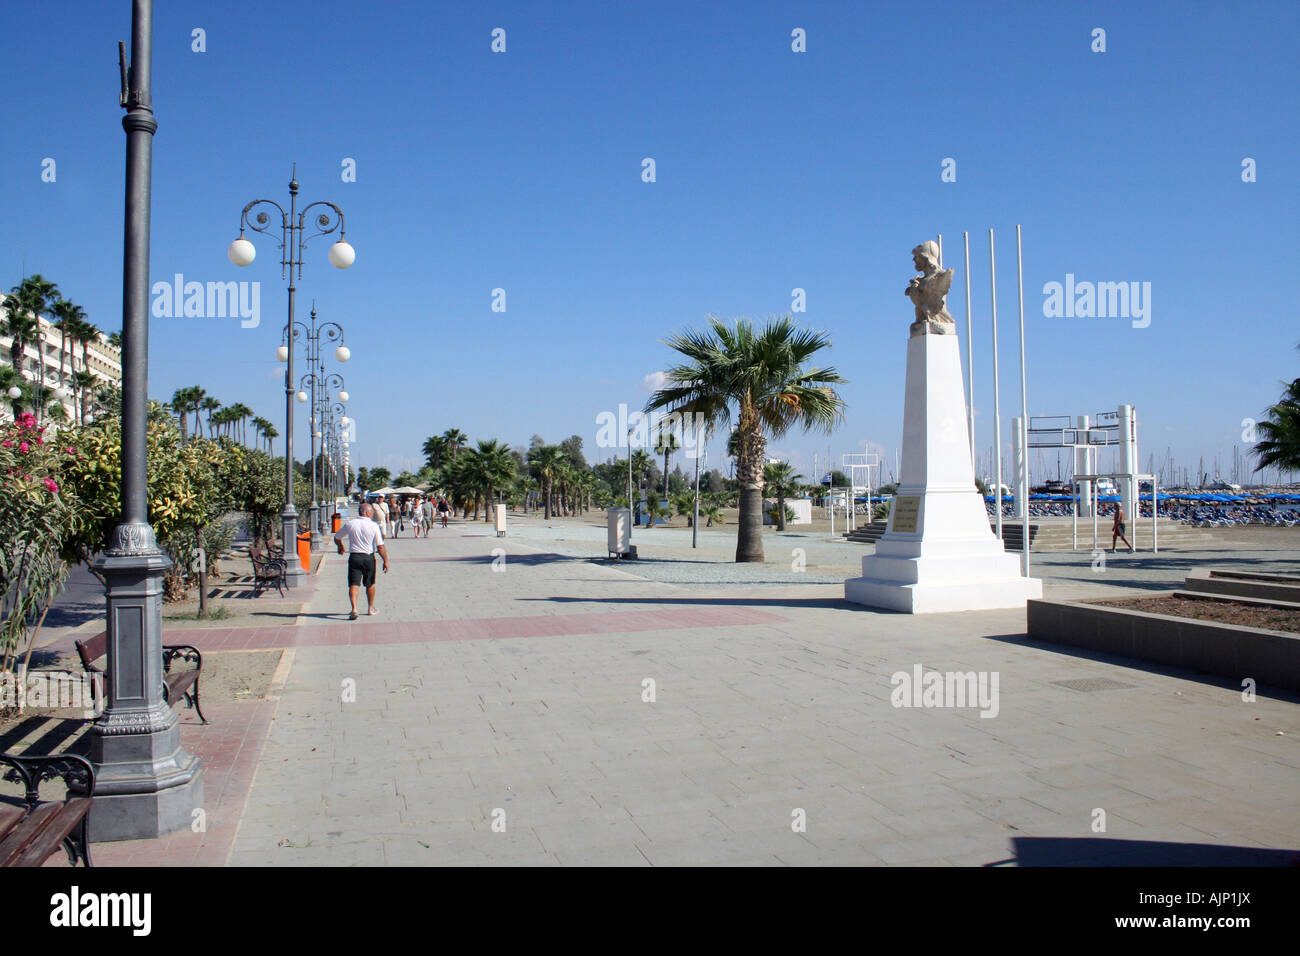 Ayia Napa promenade on island of Cyprus Stock Photo